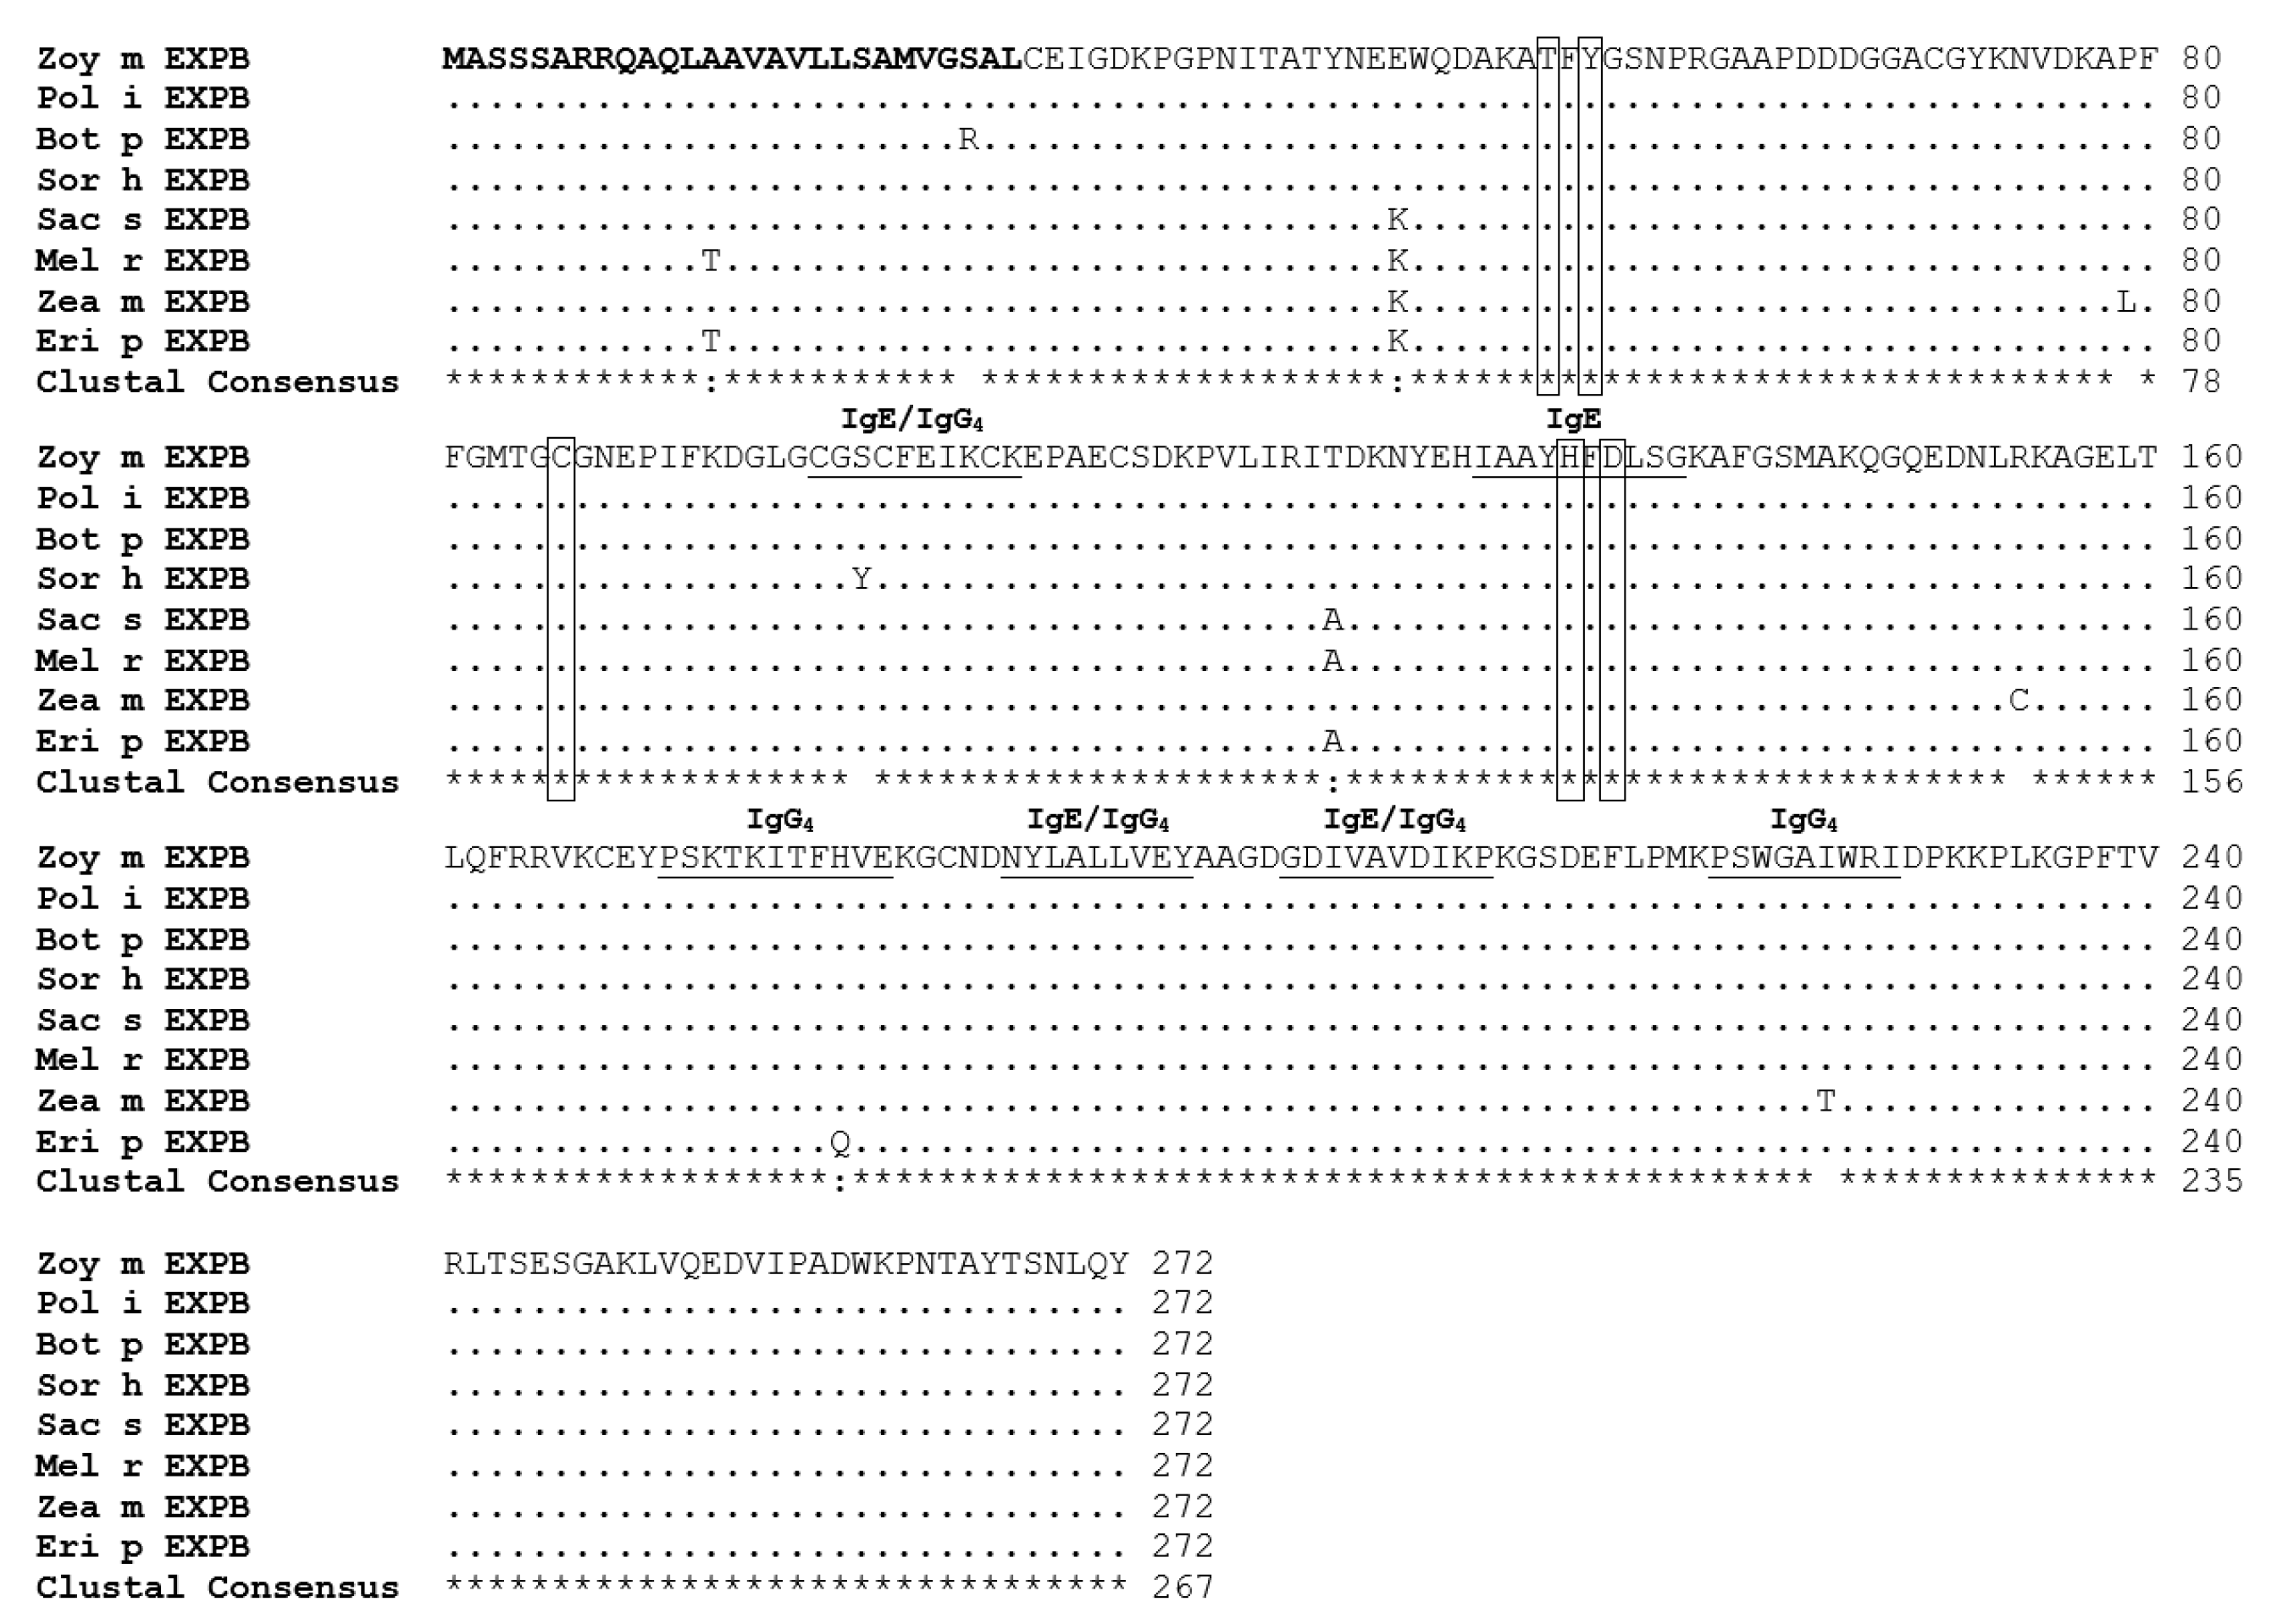 bioedit sequence identity matrix